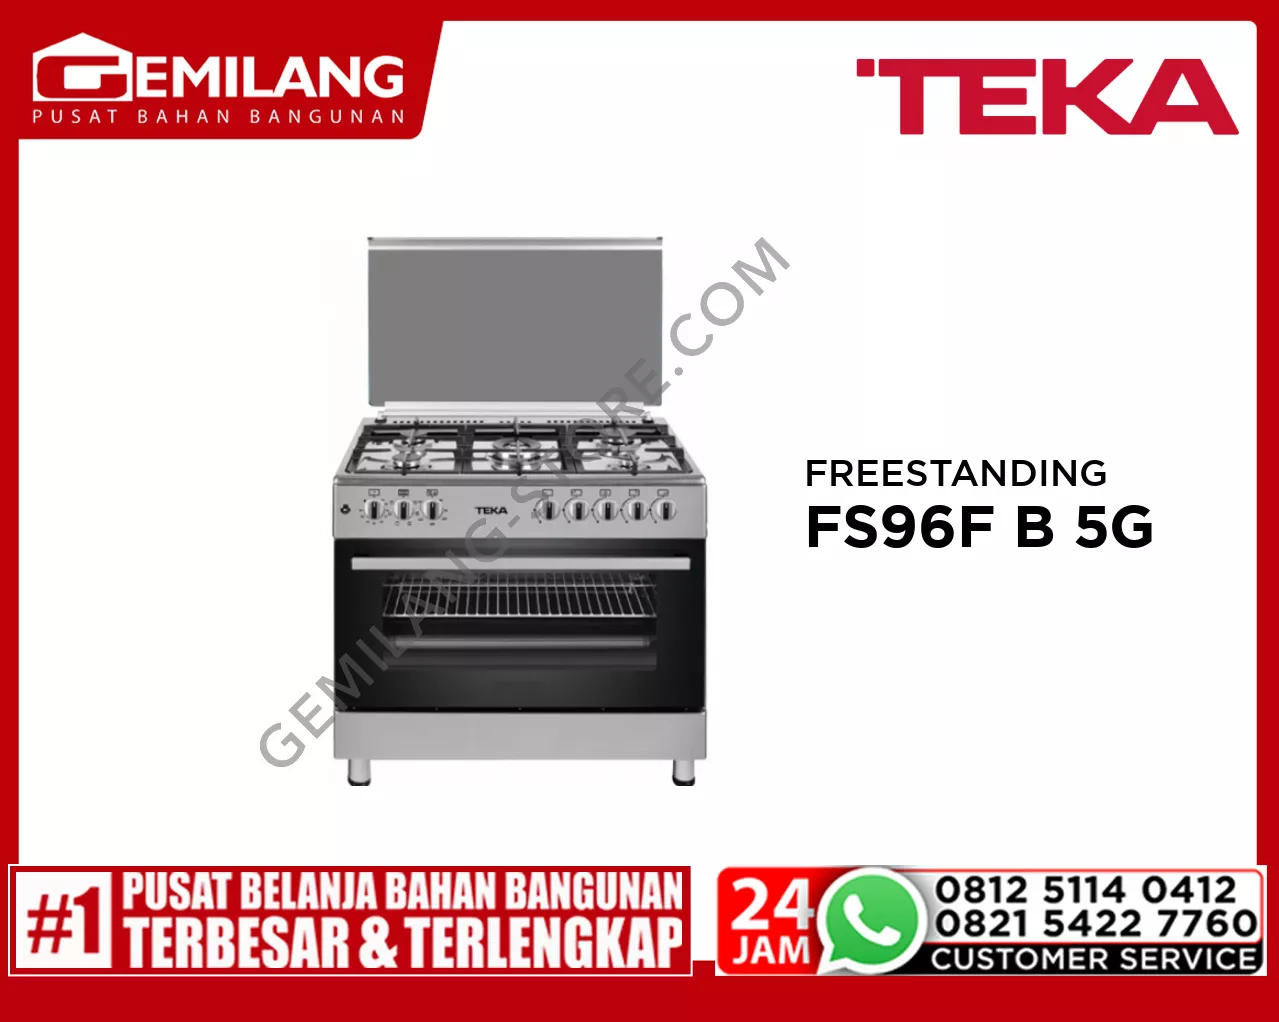 TEKA HOB FREESTANDING FS96F B 5G MAXI S/S